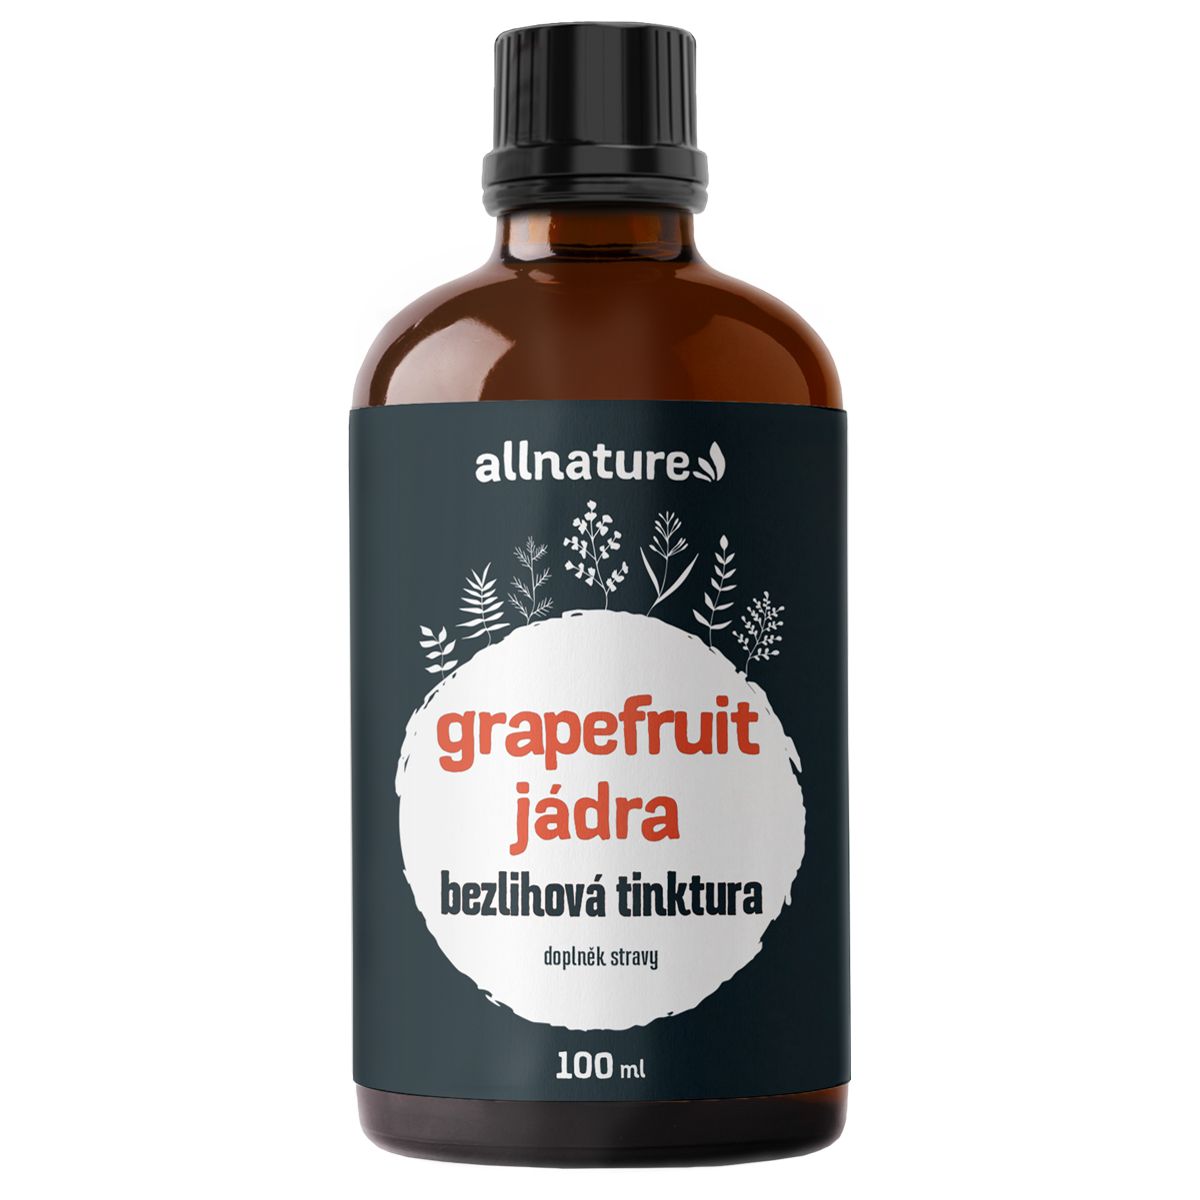 Allnature Grapefruit jádra bezlihová tinktura 100 ml Allnature